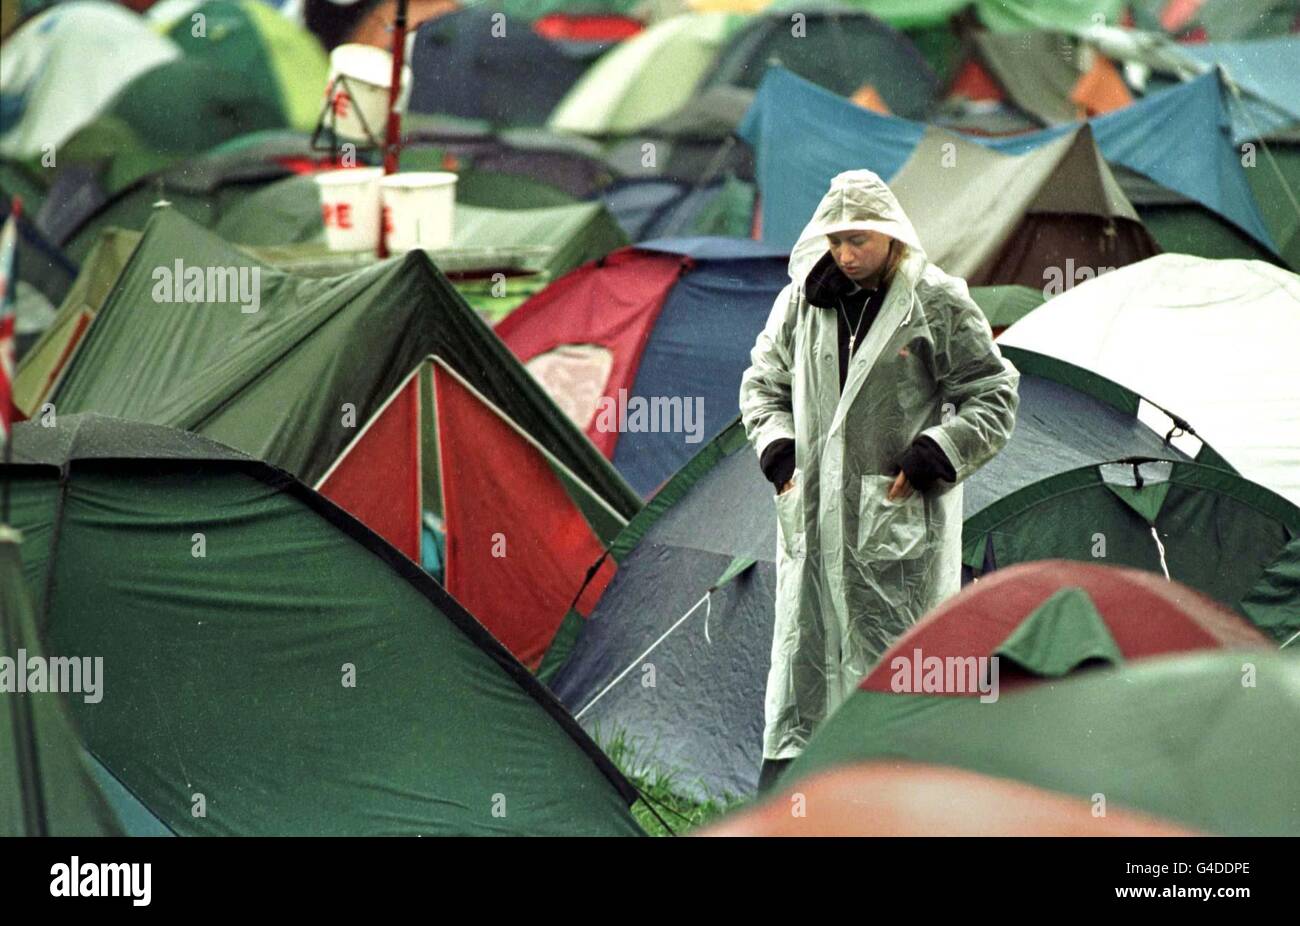 A Glastonbury festival-goer walks through the rain soaked campsite after a night of heavy rain. Stock Photo